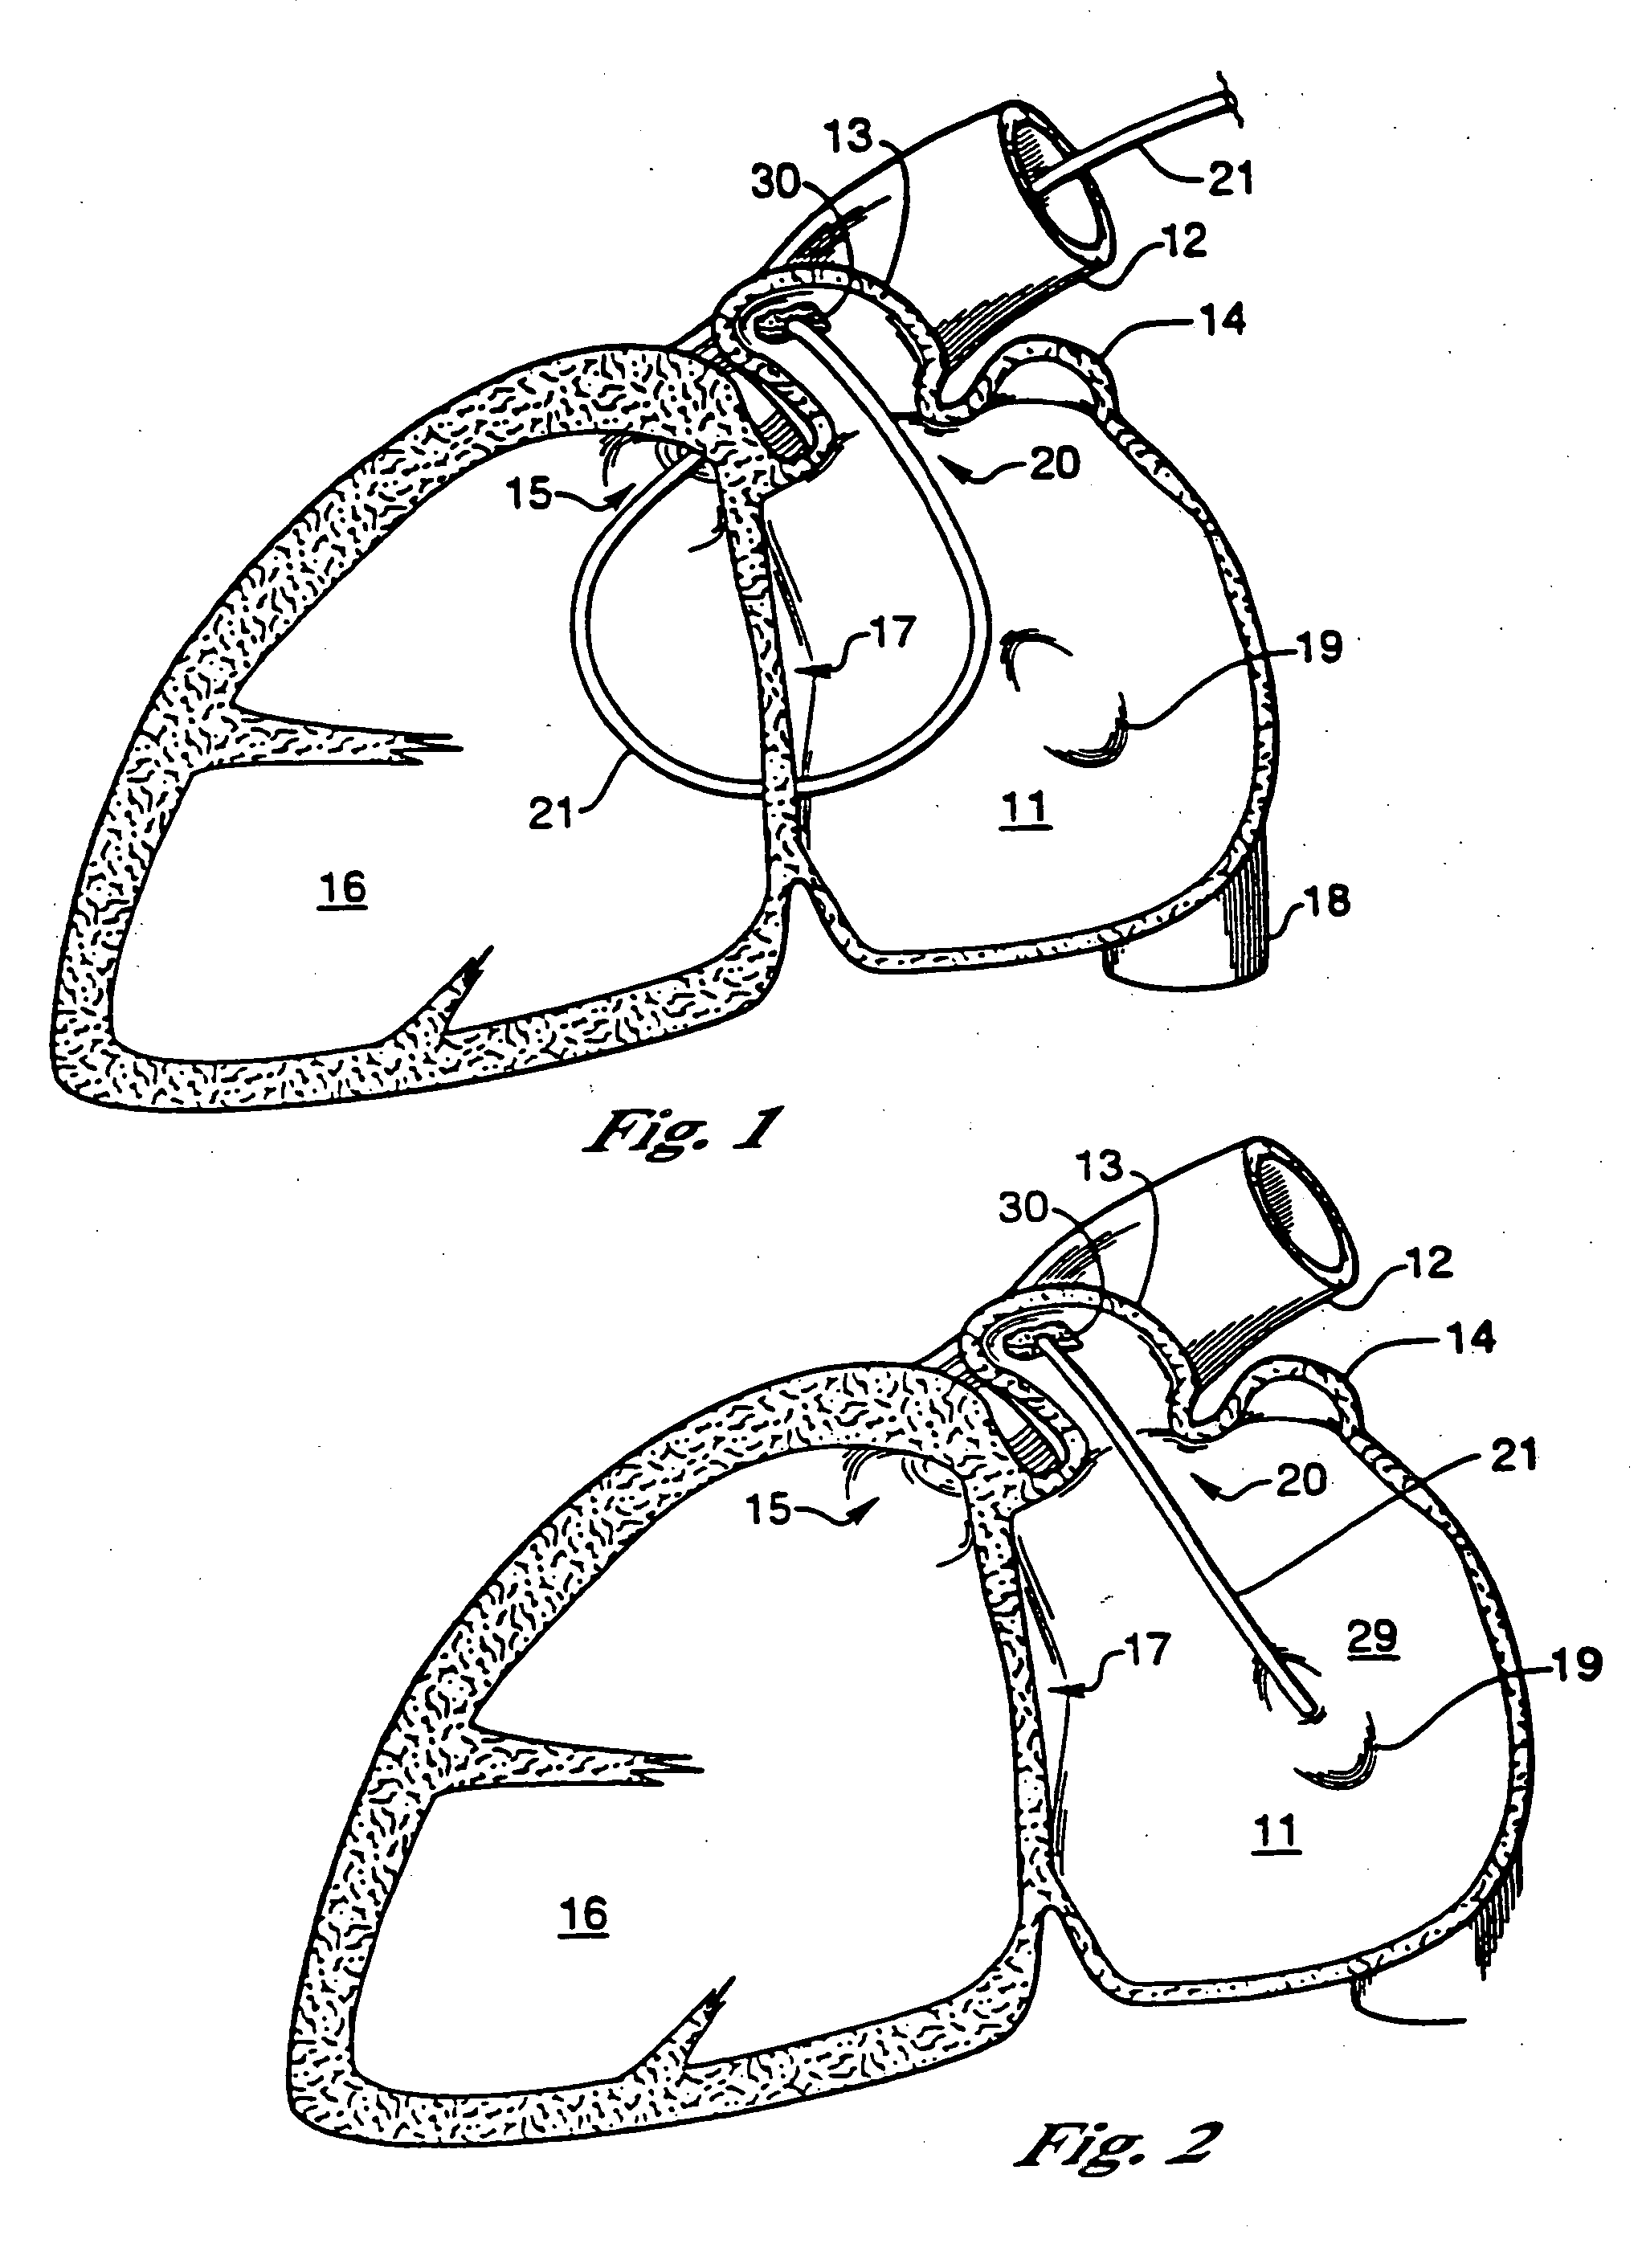 Barrier device for ostium of left atrial appendage